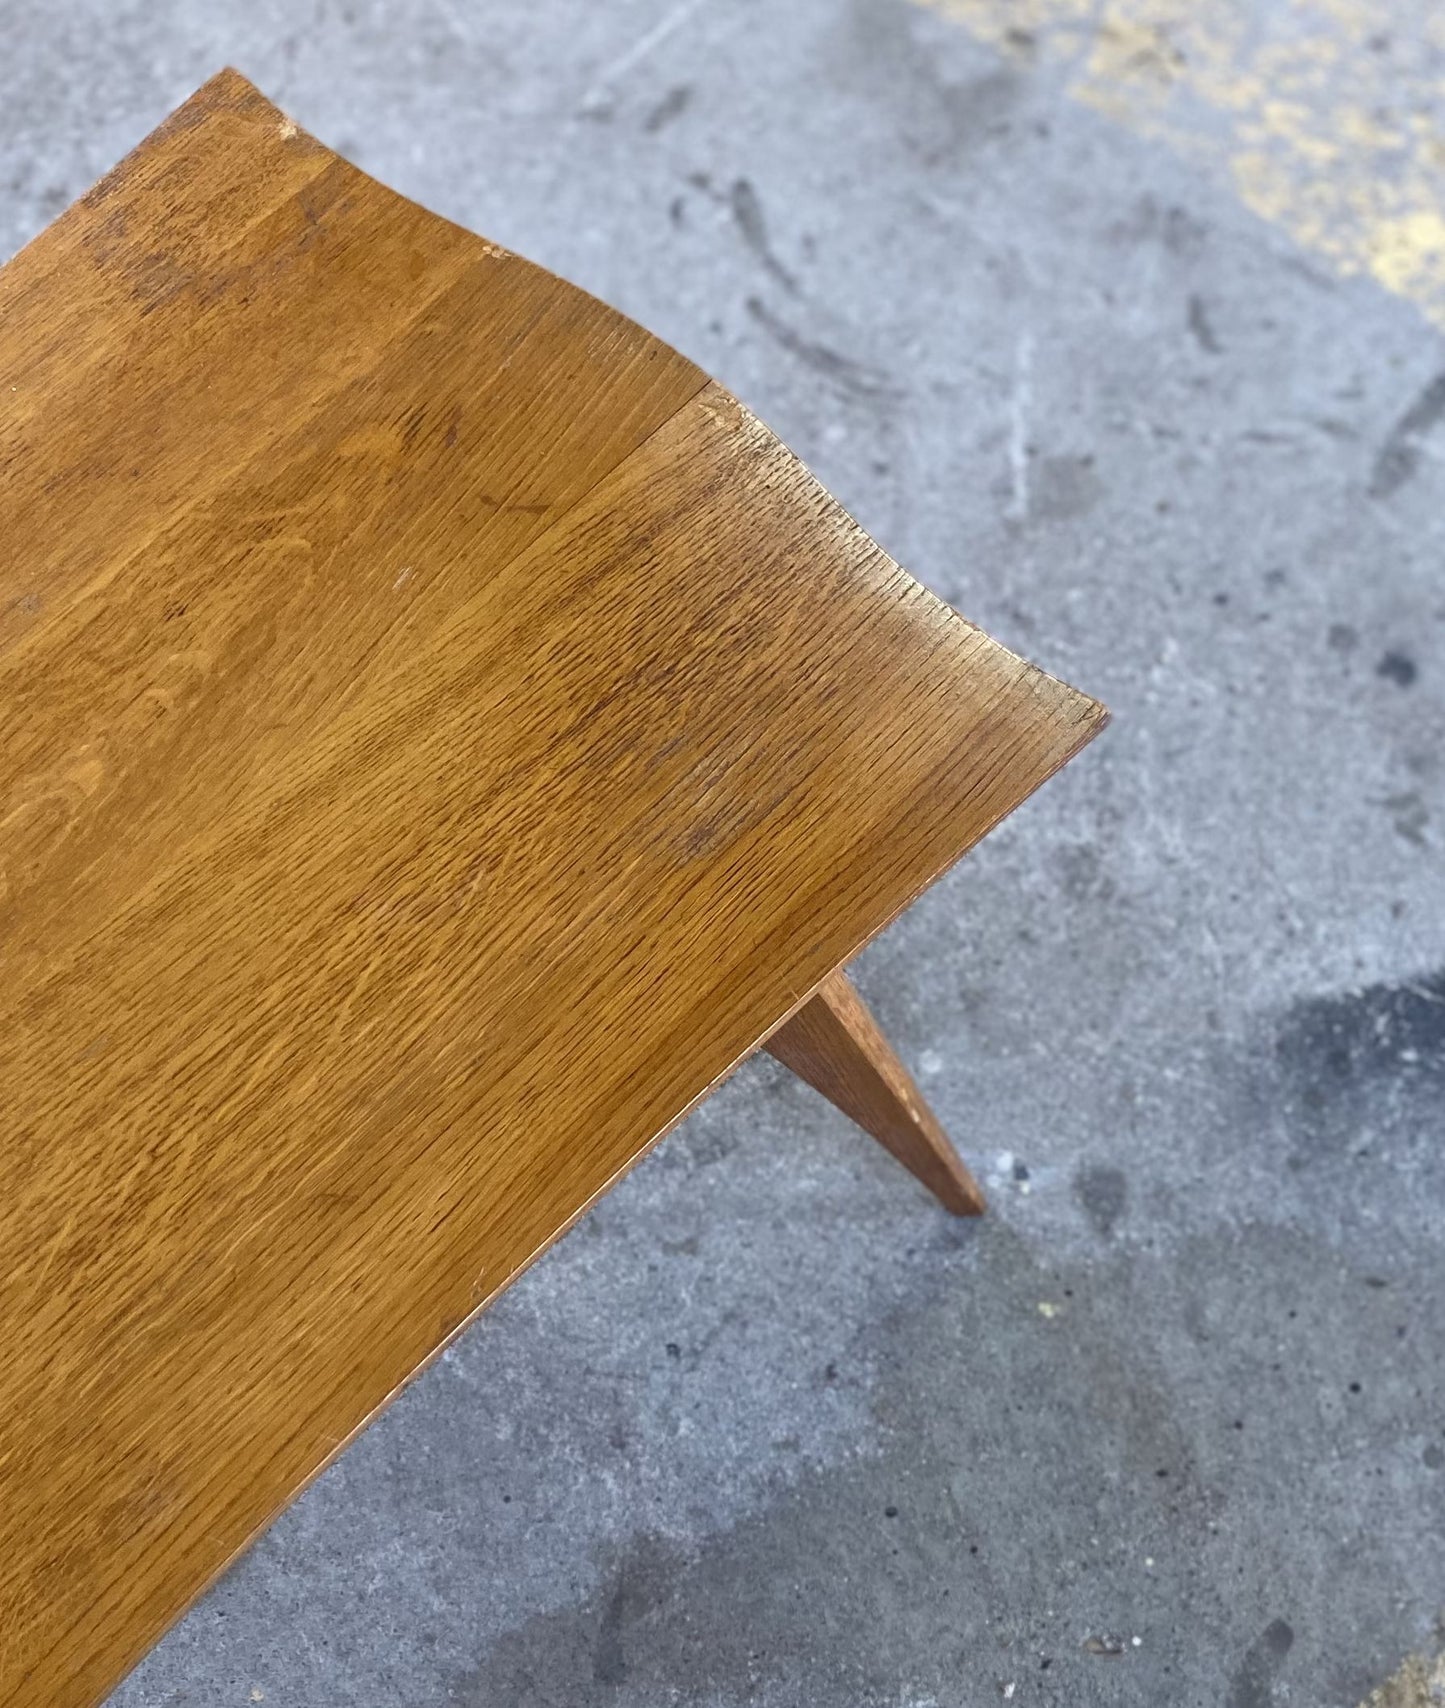 Vintage Low Table